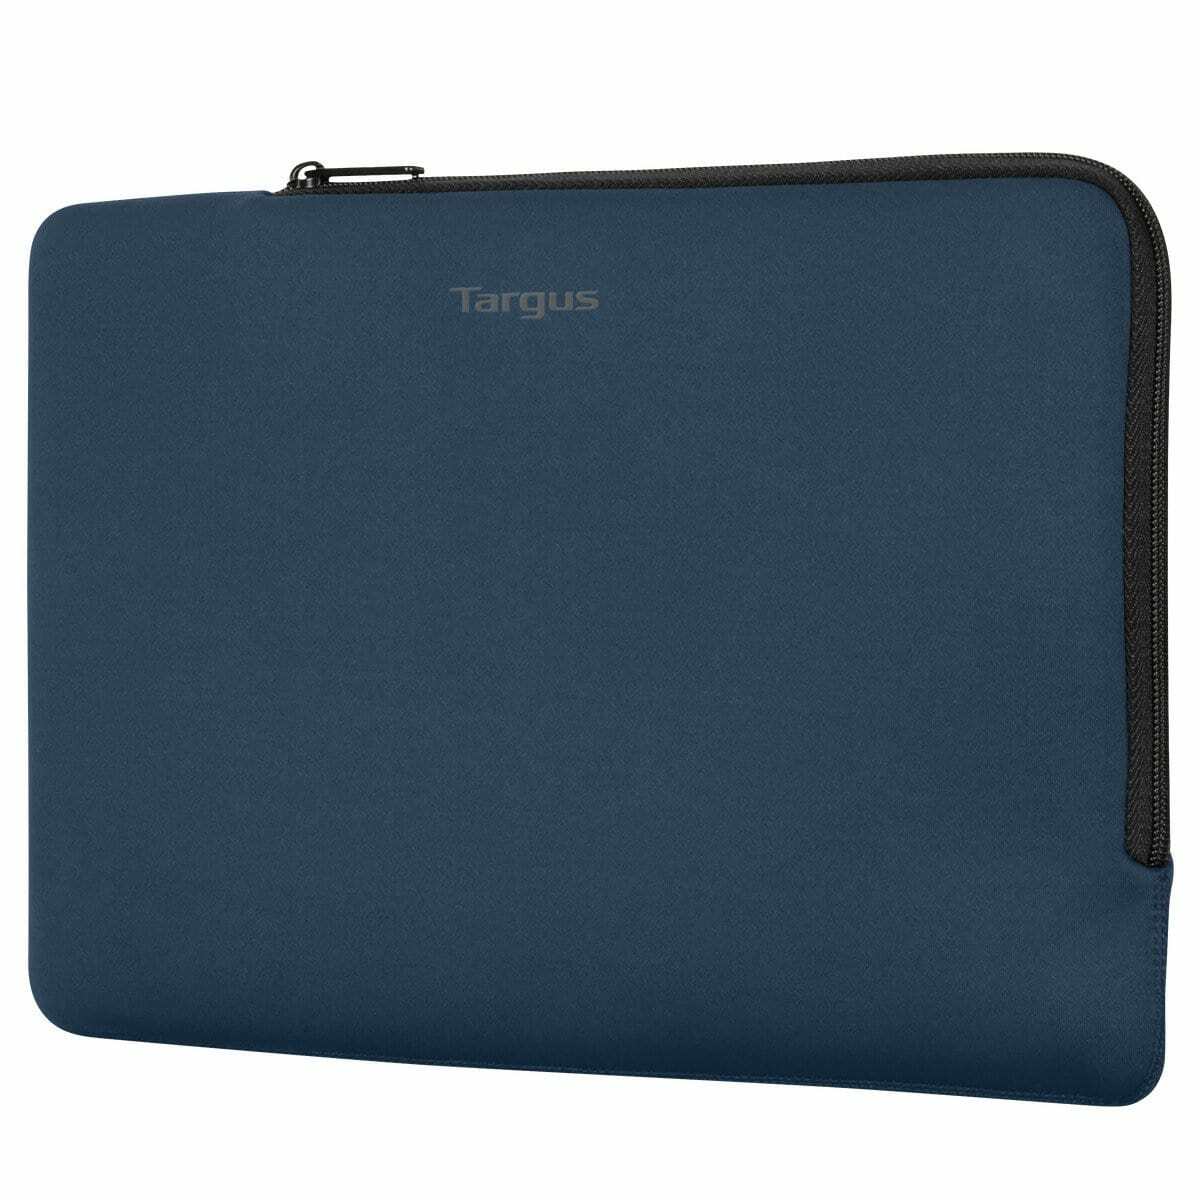 targus-laptop-bags-targus-13-14-multifit-sleeve-with-ecosmart-blue-tbs65102gl-32266343416006.jpg